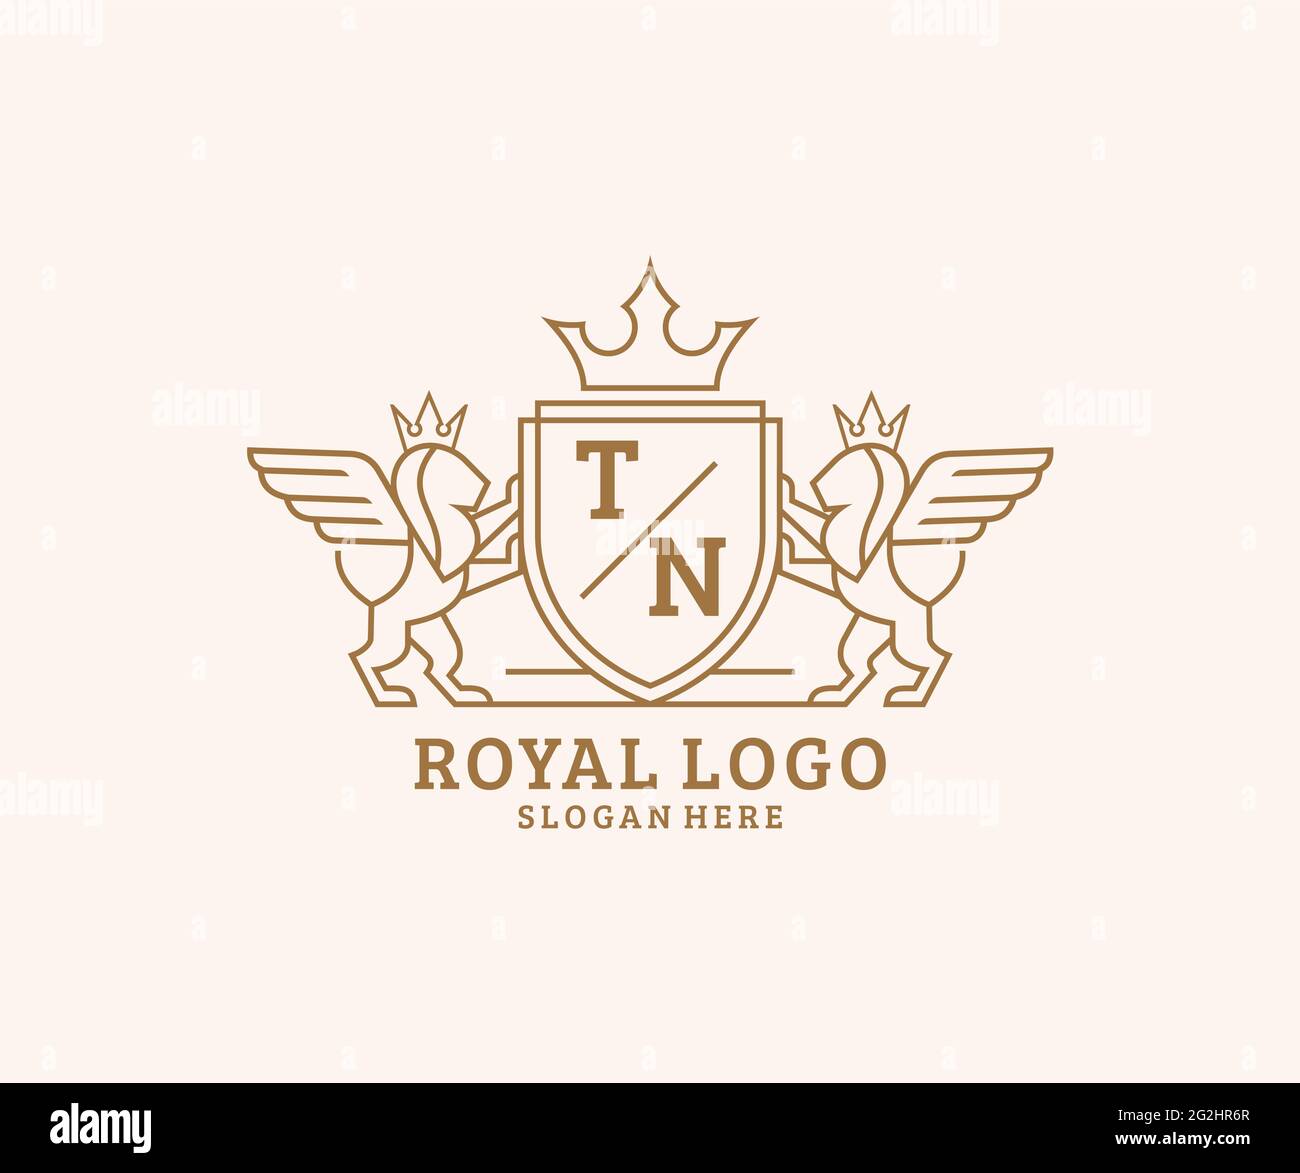 Letter TN vector logo design symbol icon emblem 6876801 Vector Art